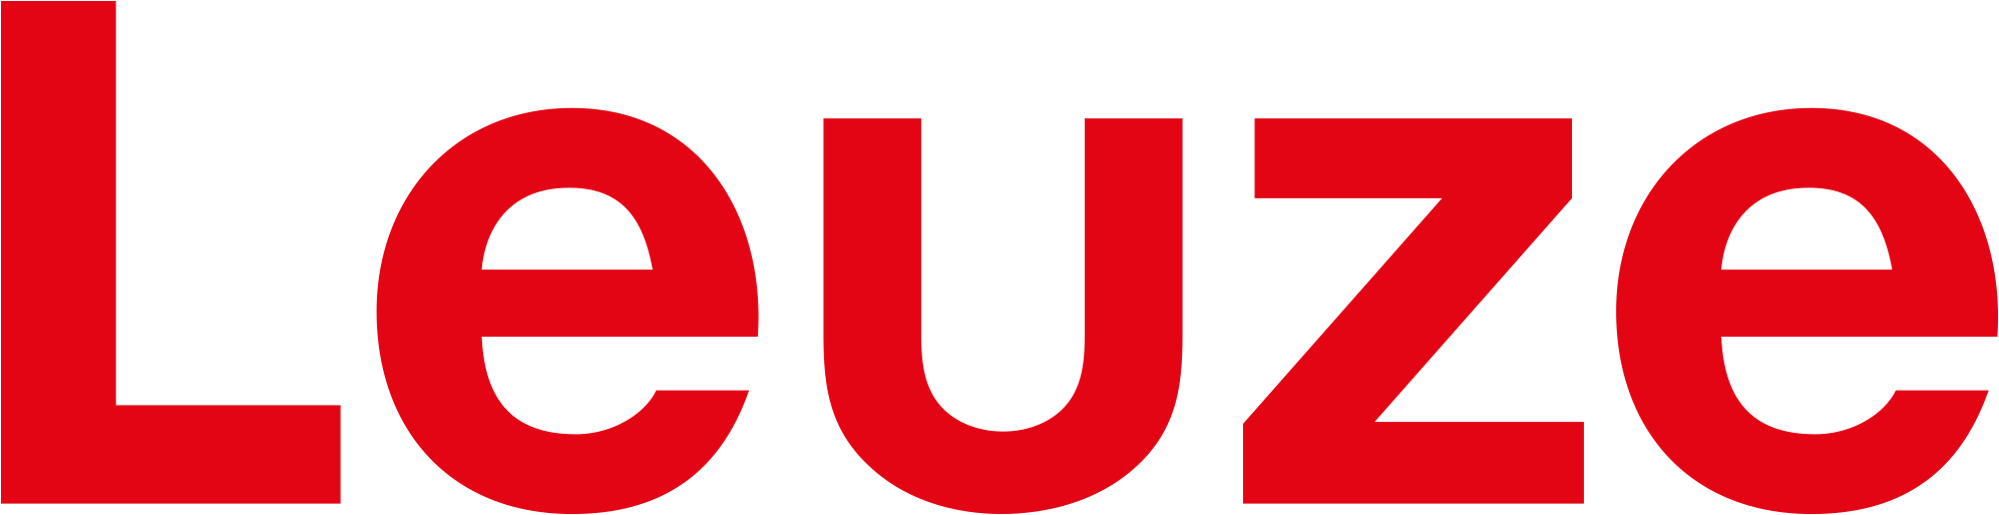 Leuze Logo